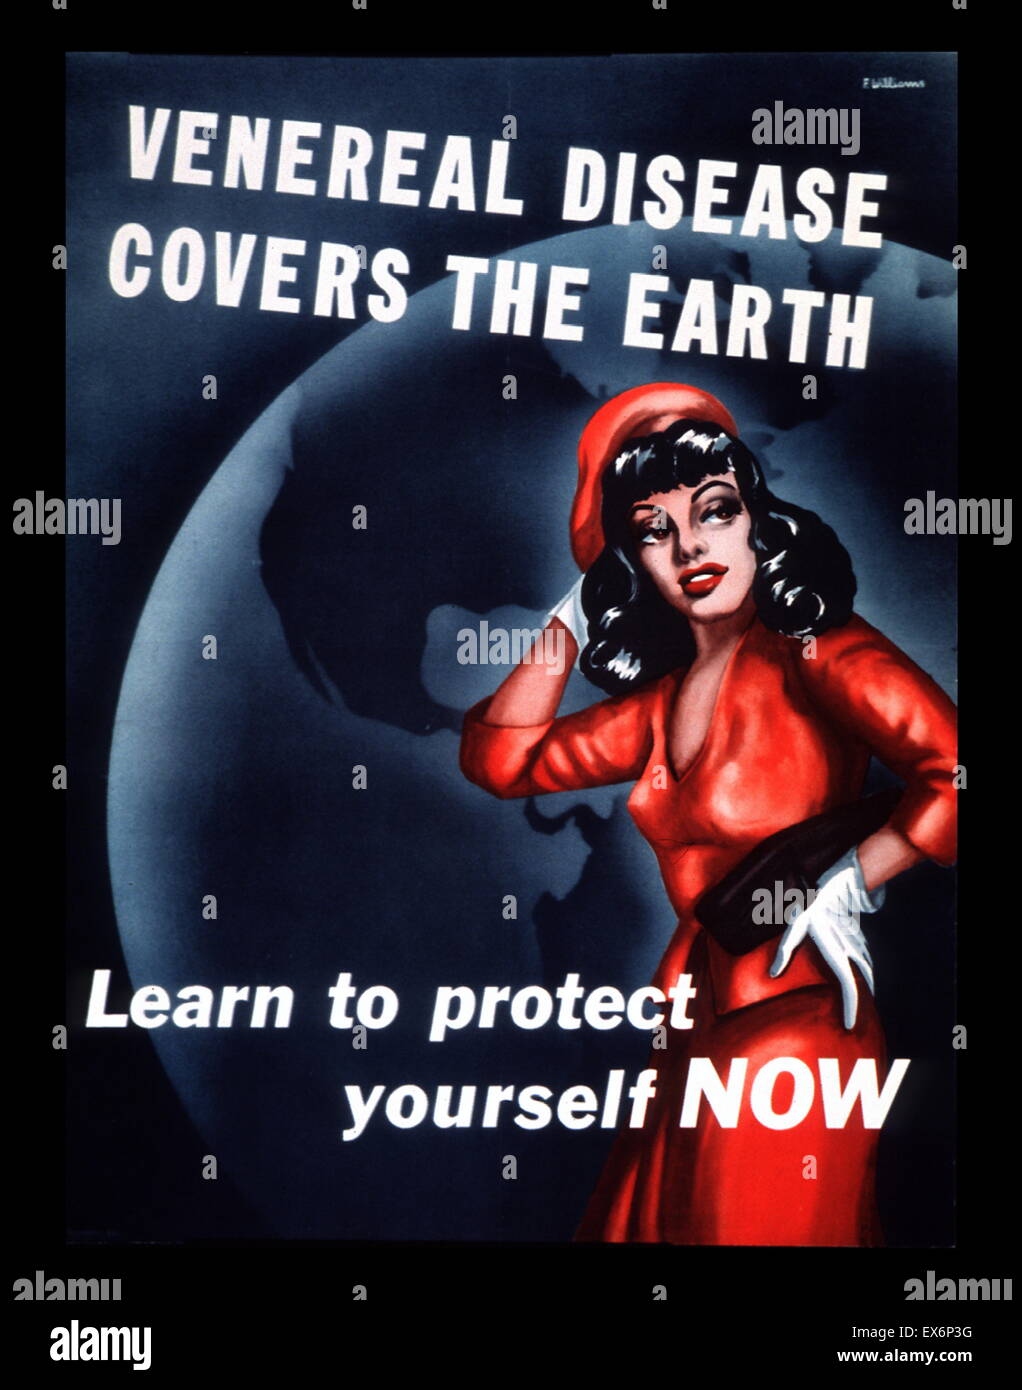 Venereal Disease Covers the Earth 1940 american Public health poster to raise awareness venereal disease Stock Photo